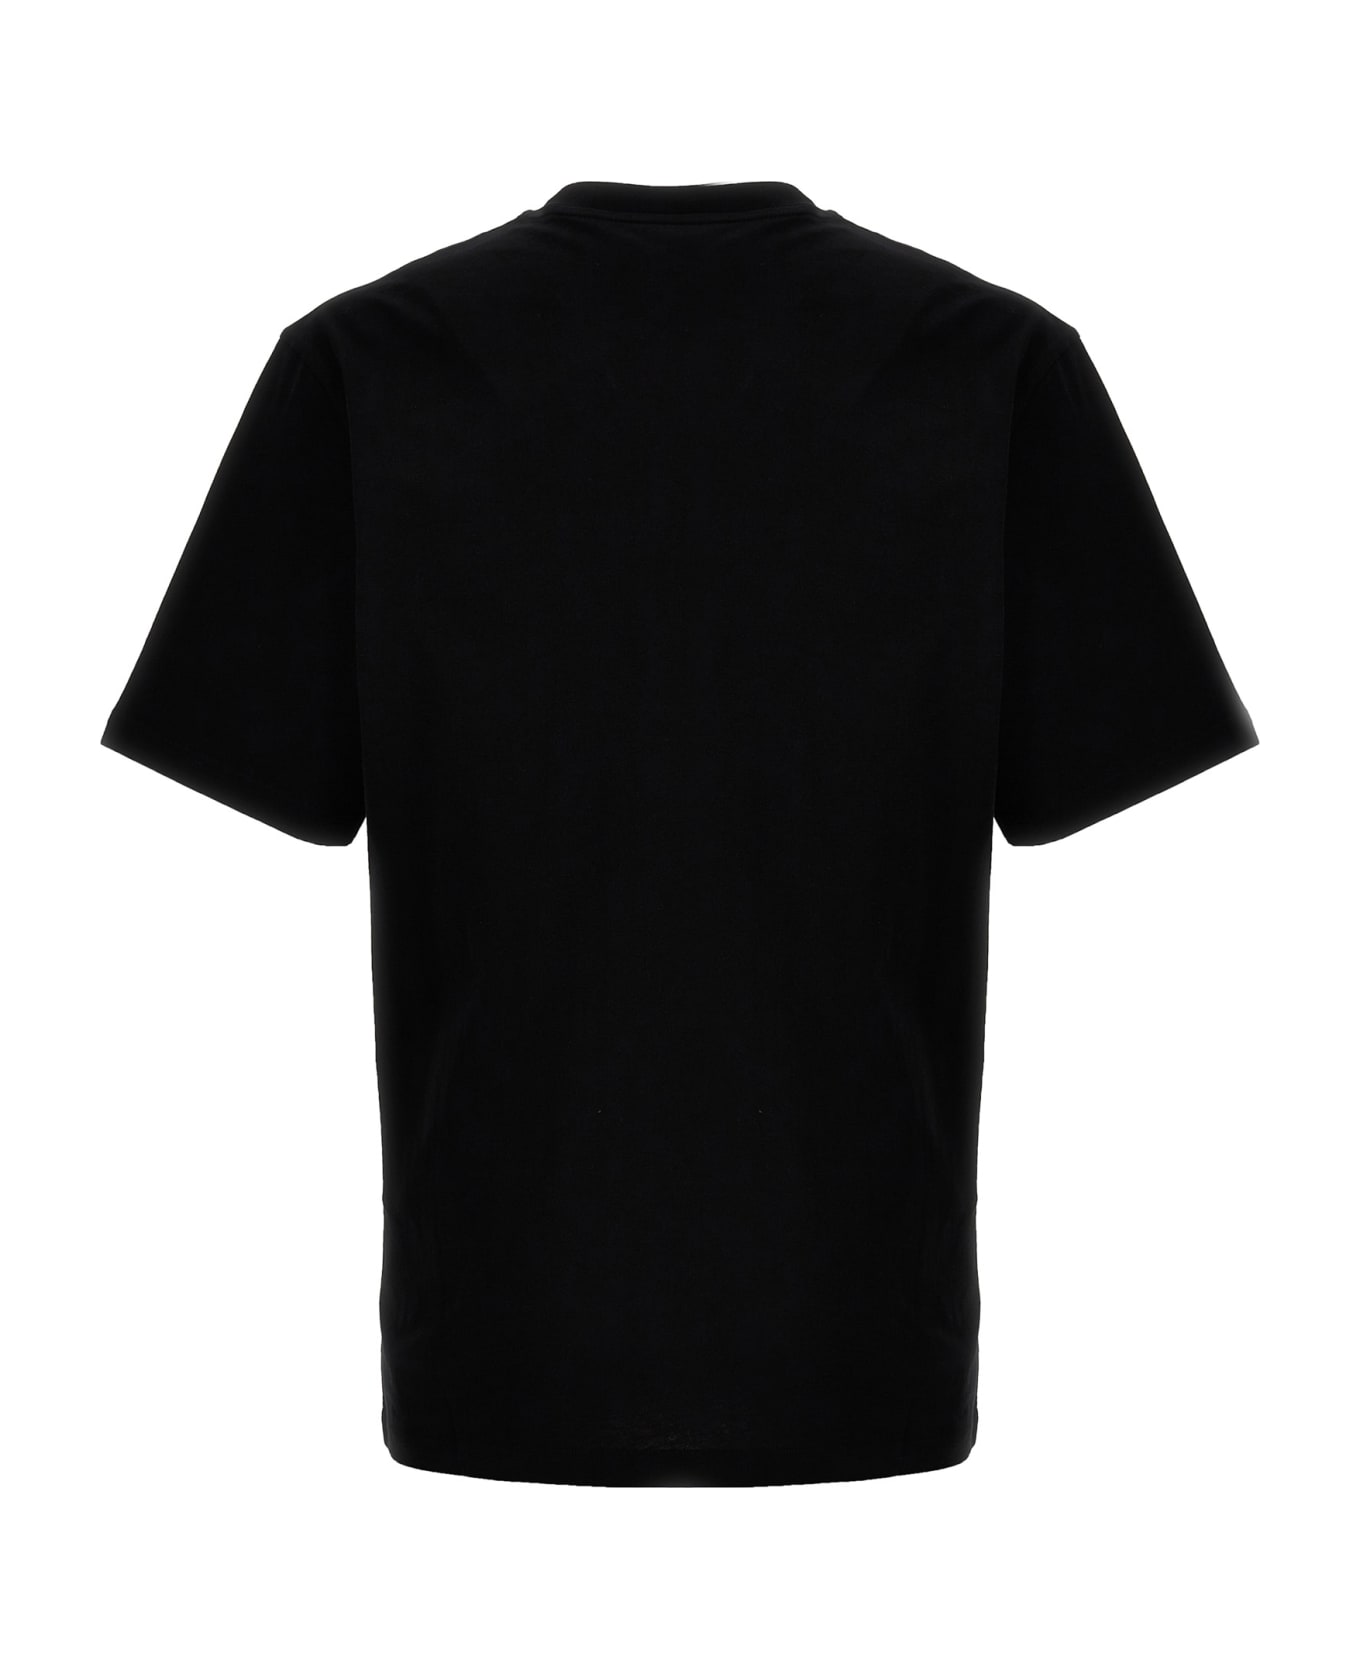 Moschino 'archive Teddy' T-shirt - Black  